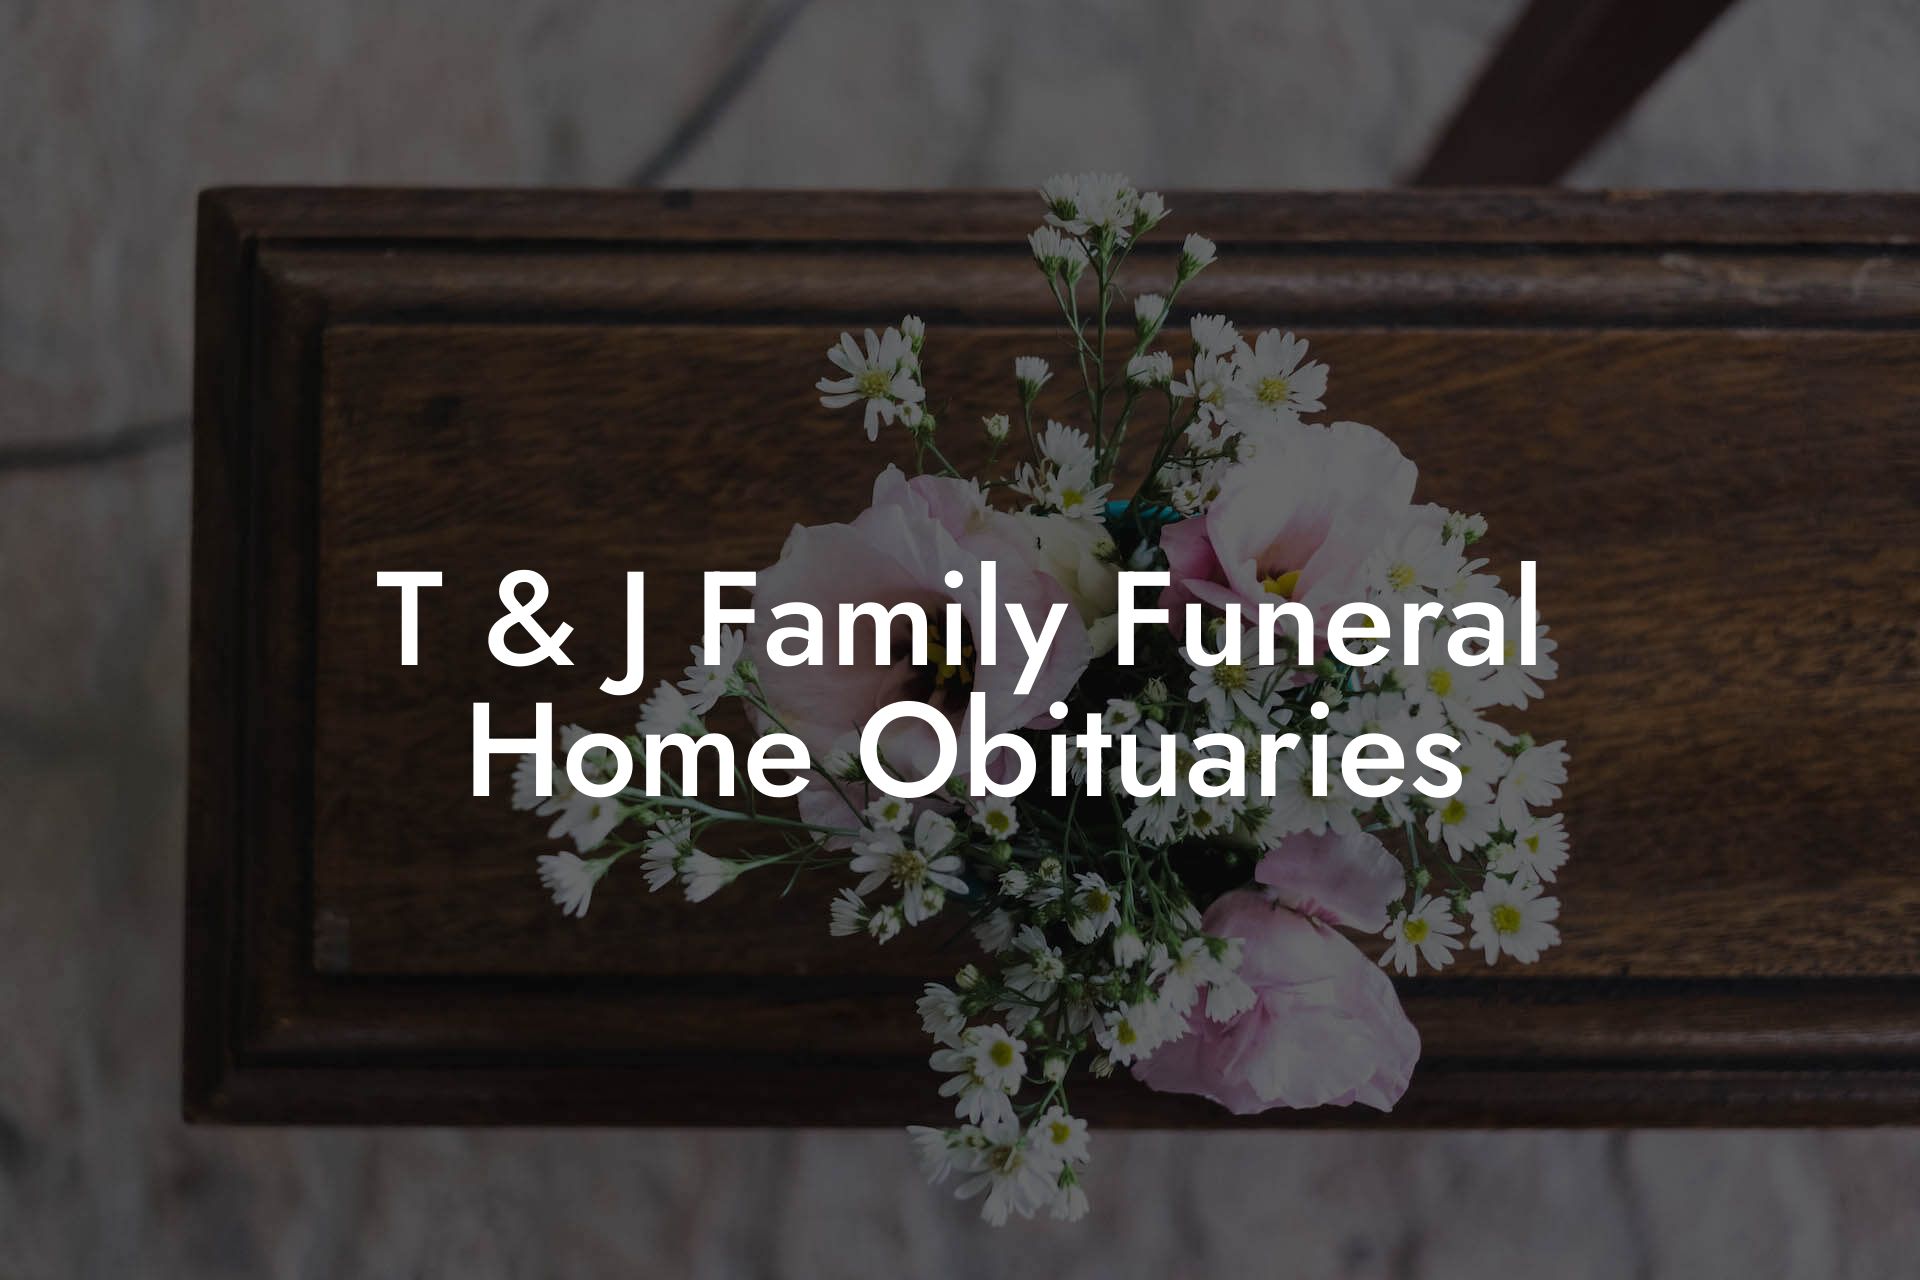 T & J Family Funeral Home Obituaries